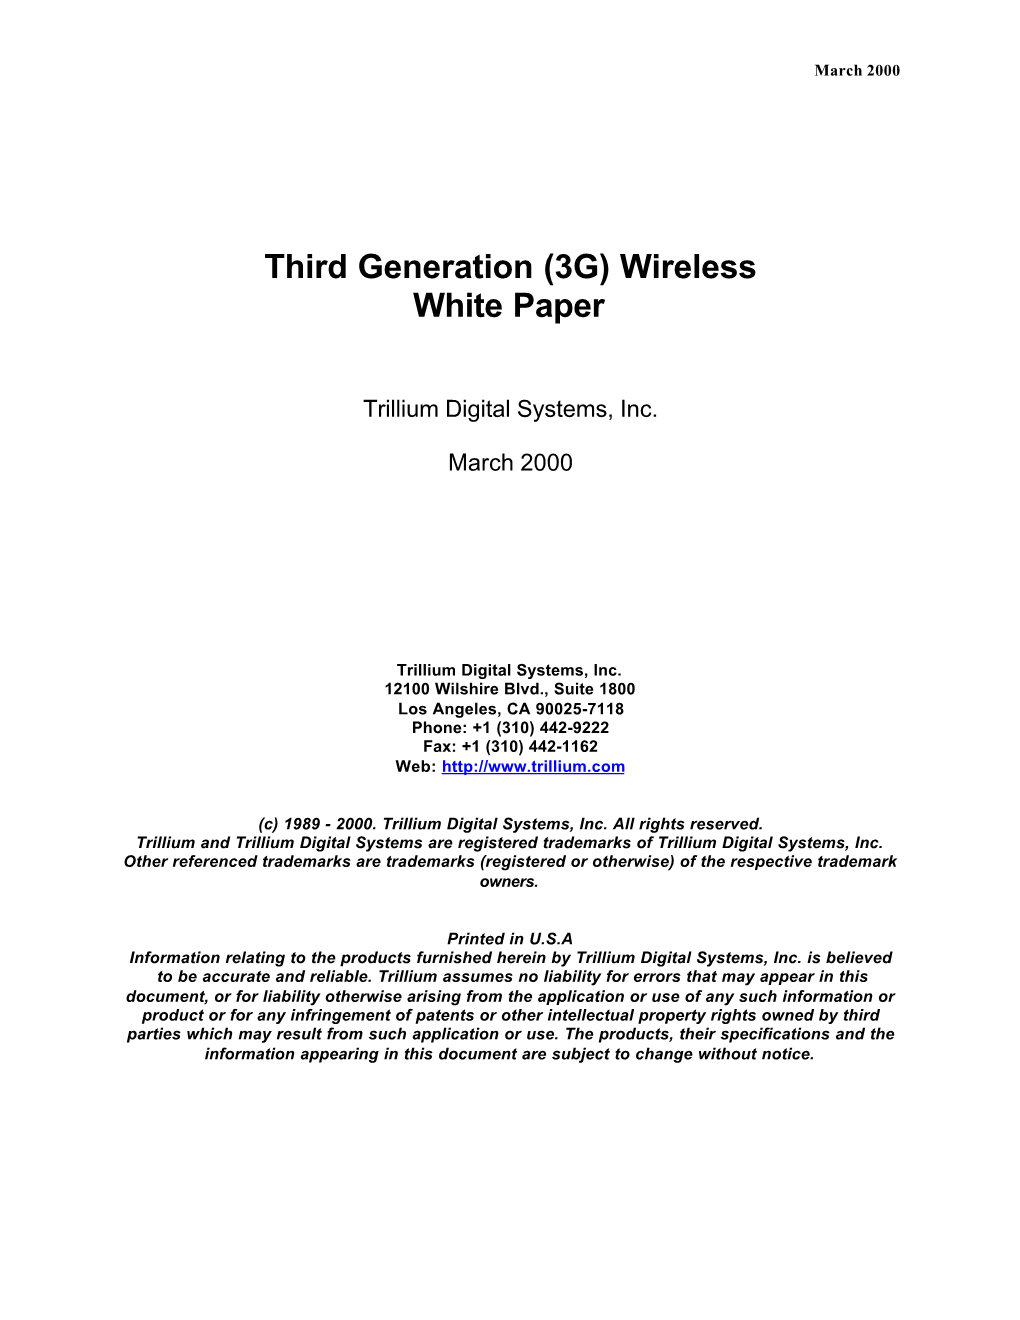 Third Generation (3G) Wireless White Paper